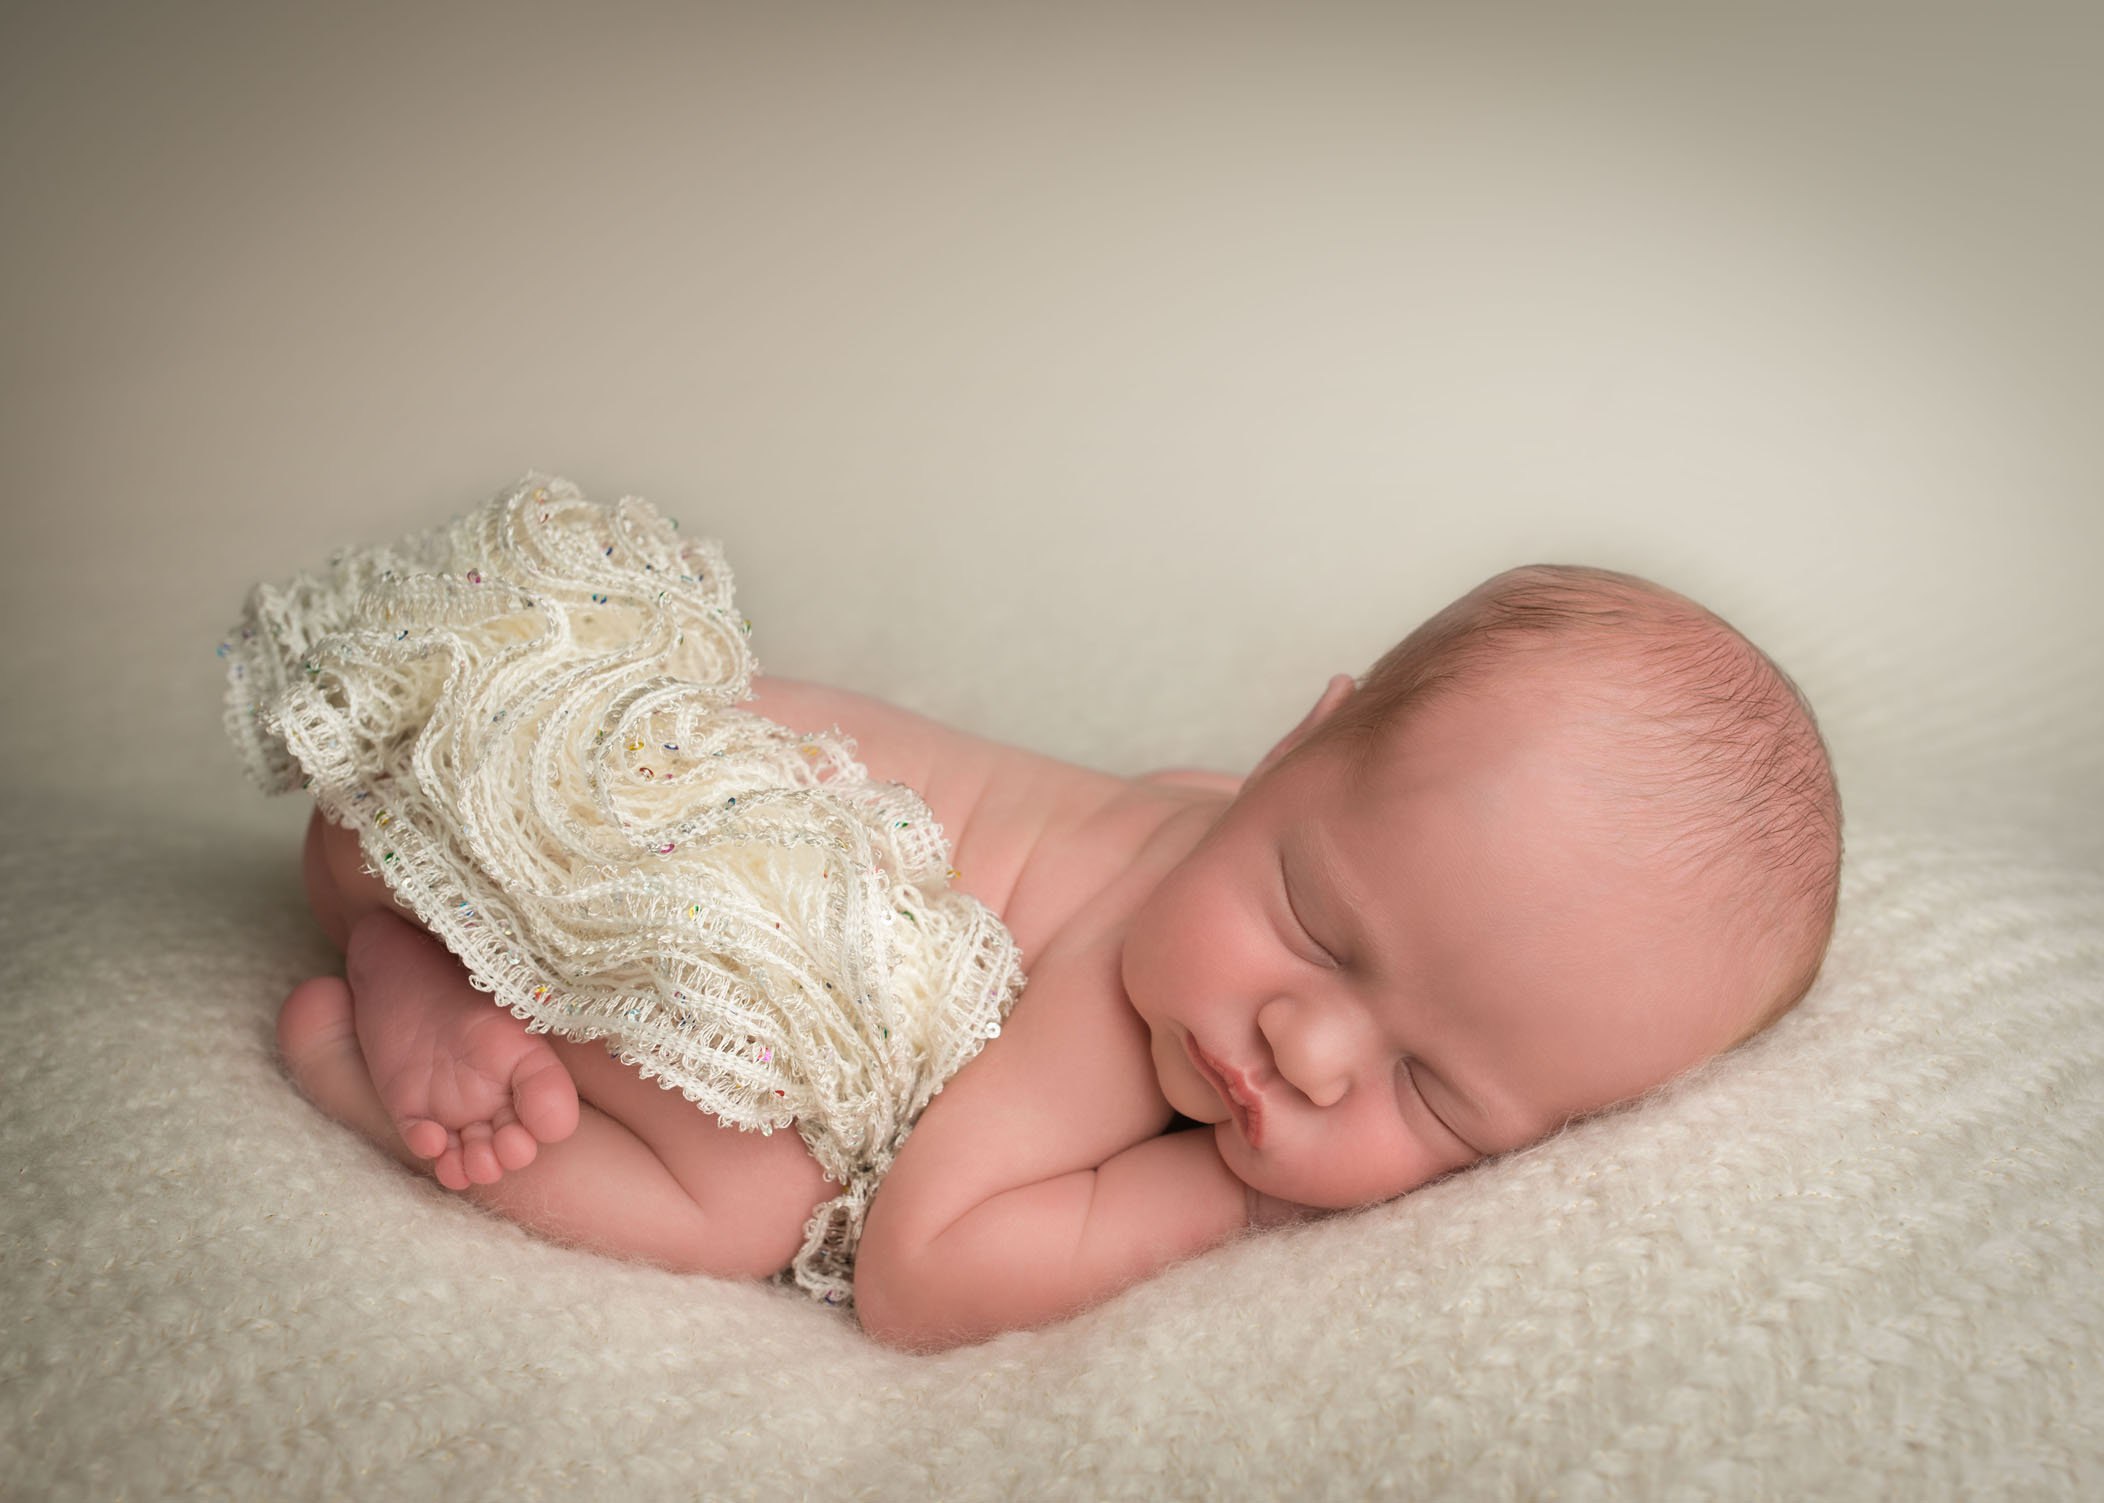 newborn baby girl sleeping on cream blanket wearing a tutu